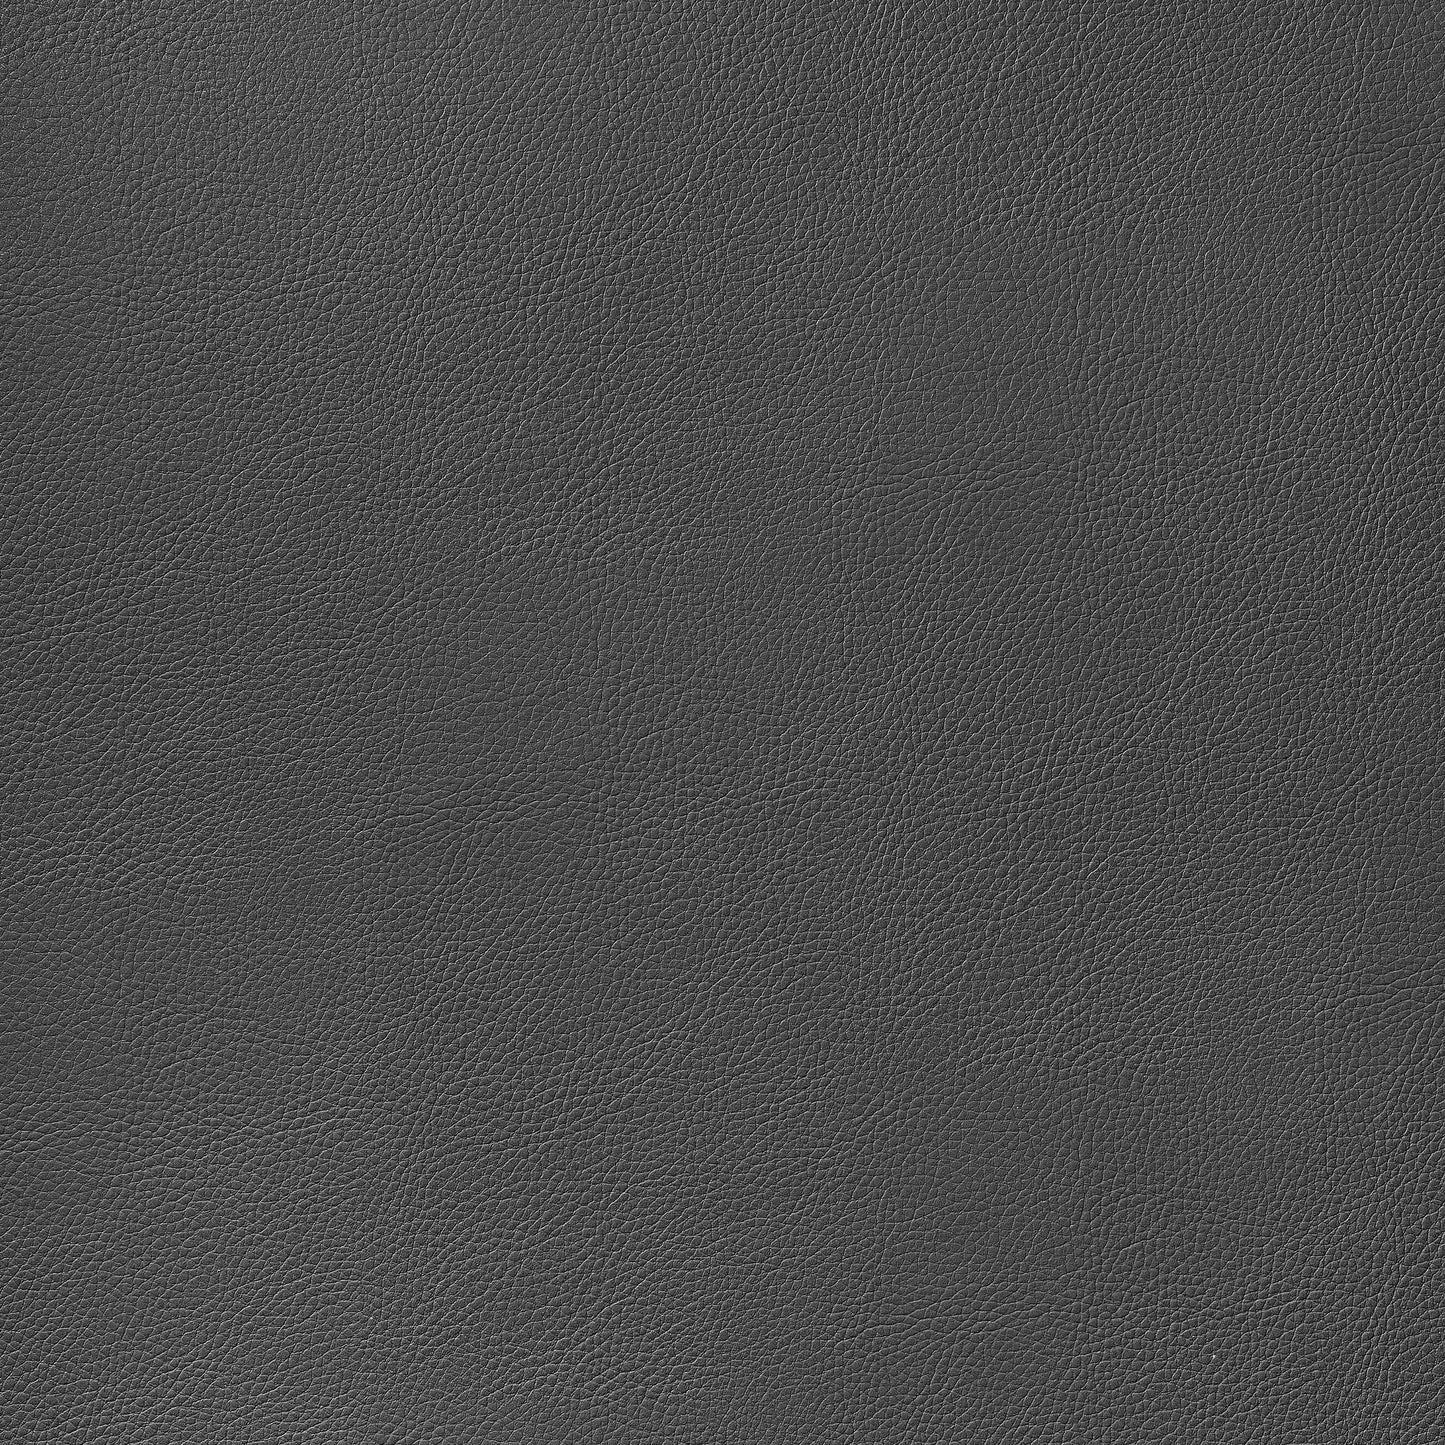 Purchase Thibaut Fabric SKU# W78398 pattern name Arcata color Black